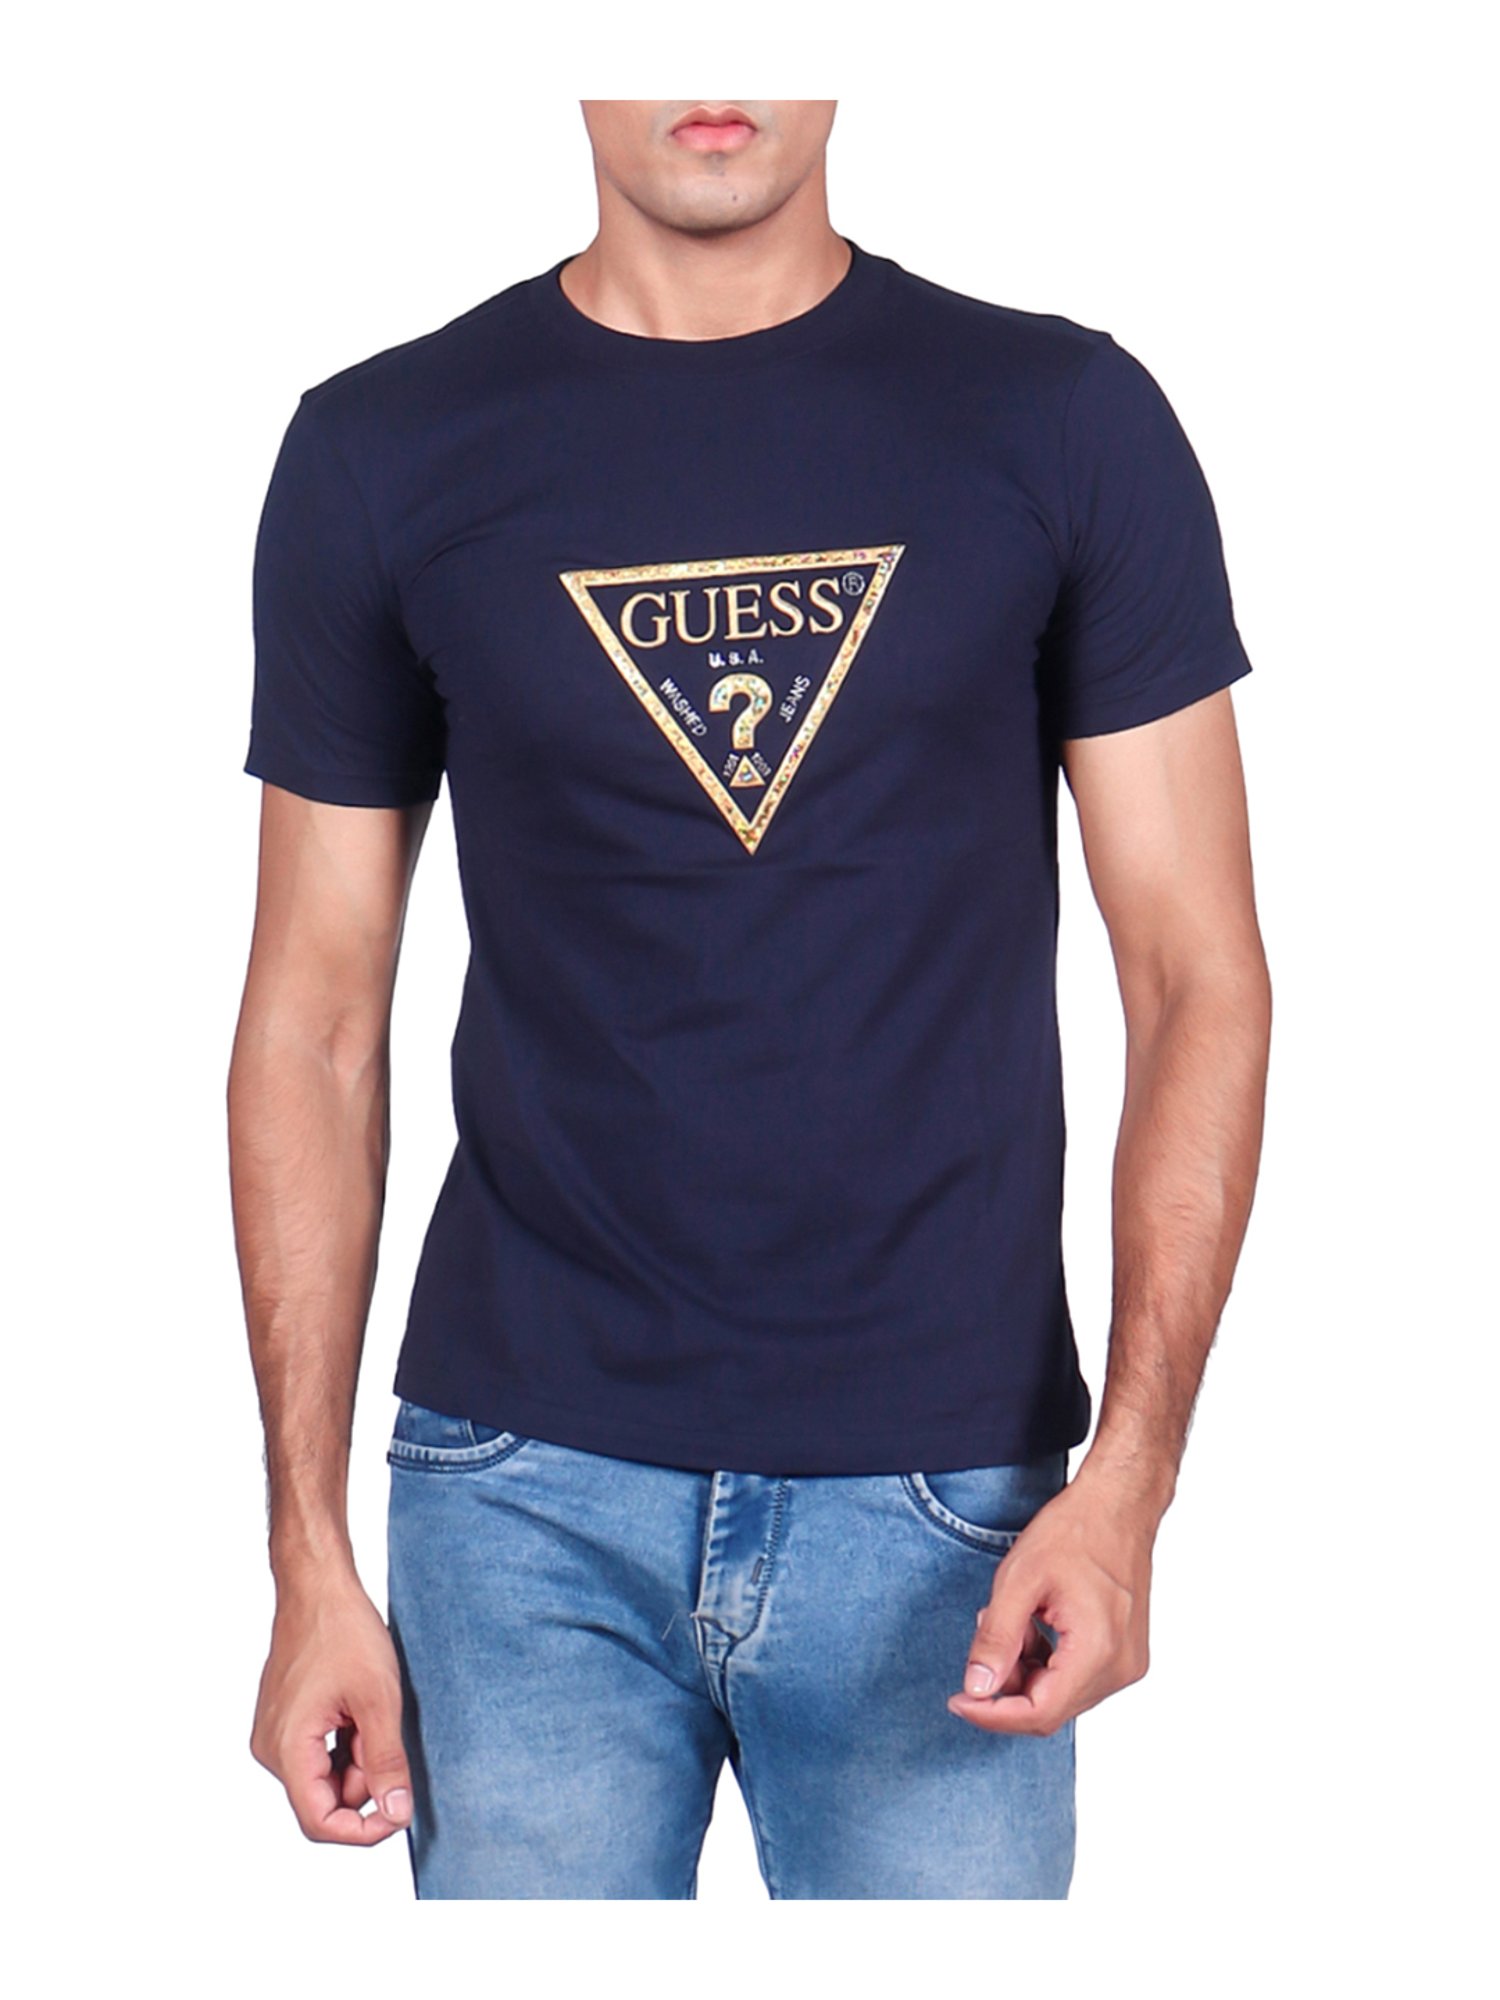 Guess Crew T-Shirt for Men's Online @ Tata CLiQ